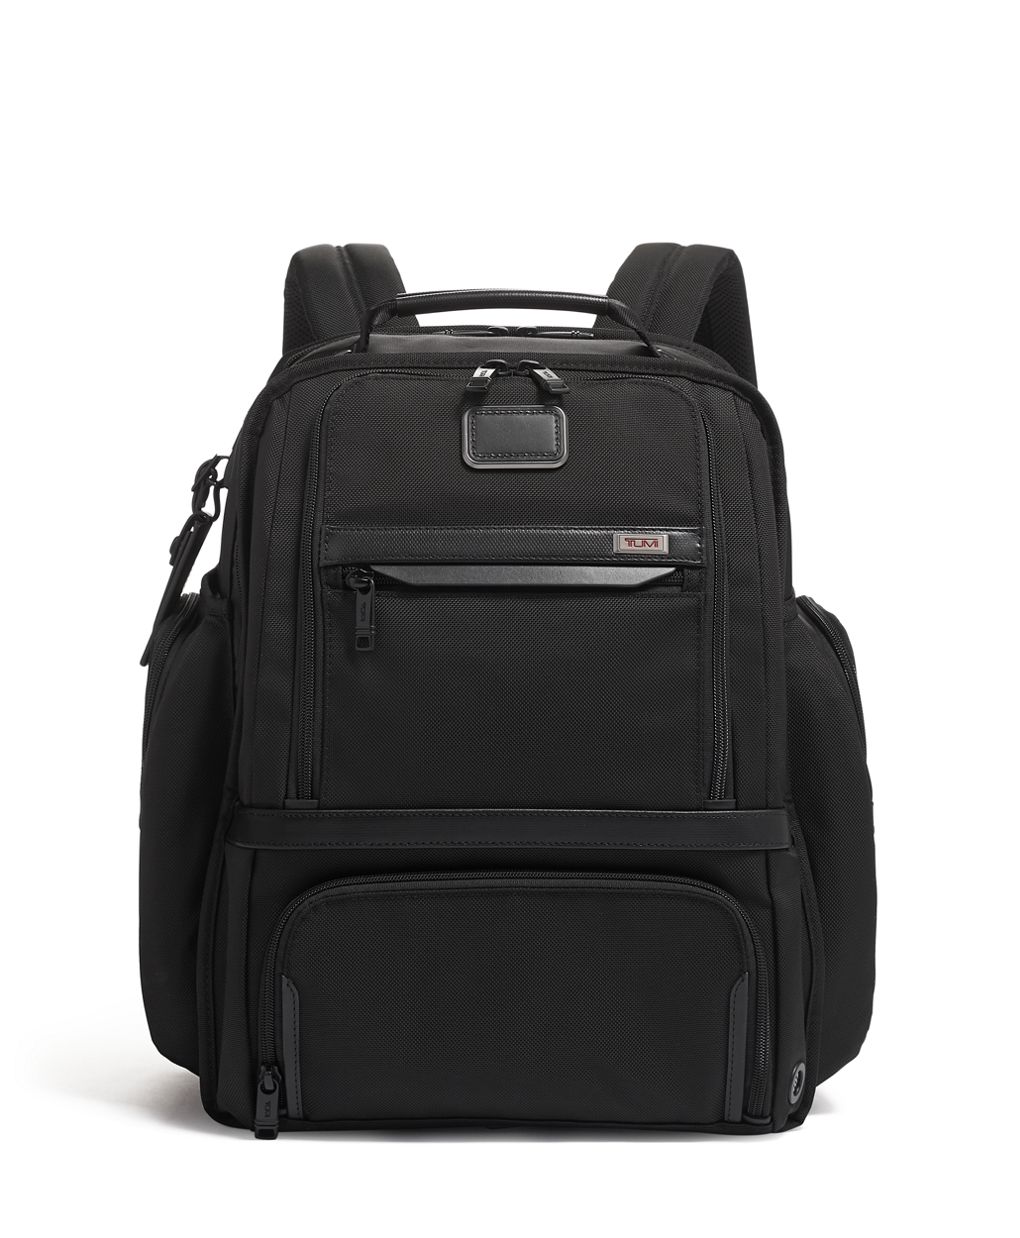 Tumi backpack - ayanawebzine.com